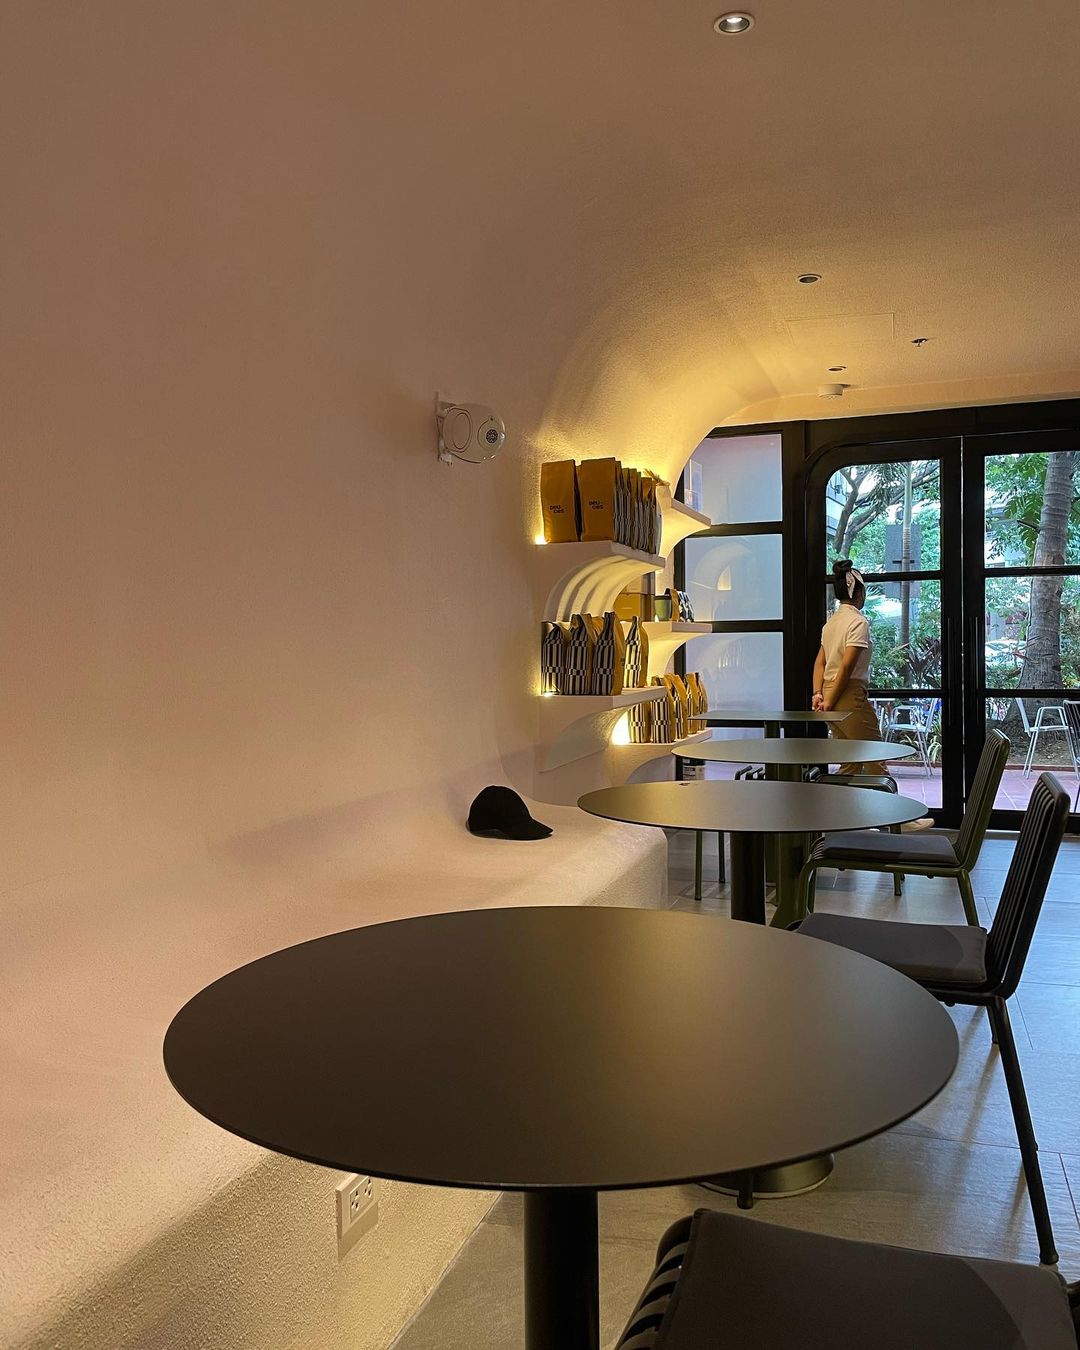 Deuces Coffee - minimalist interior